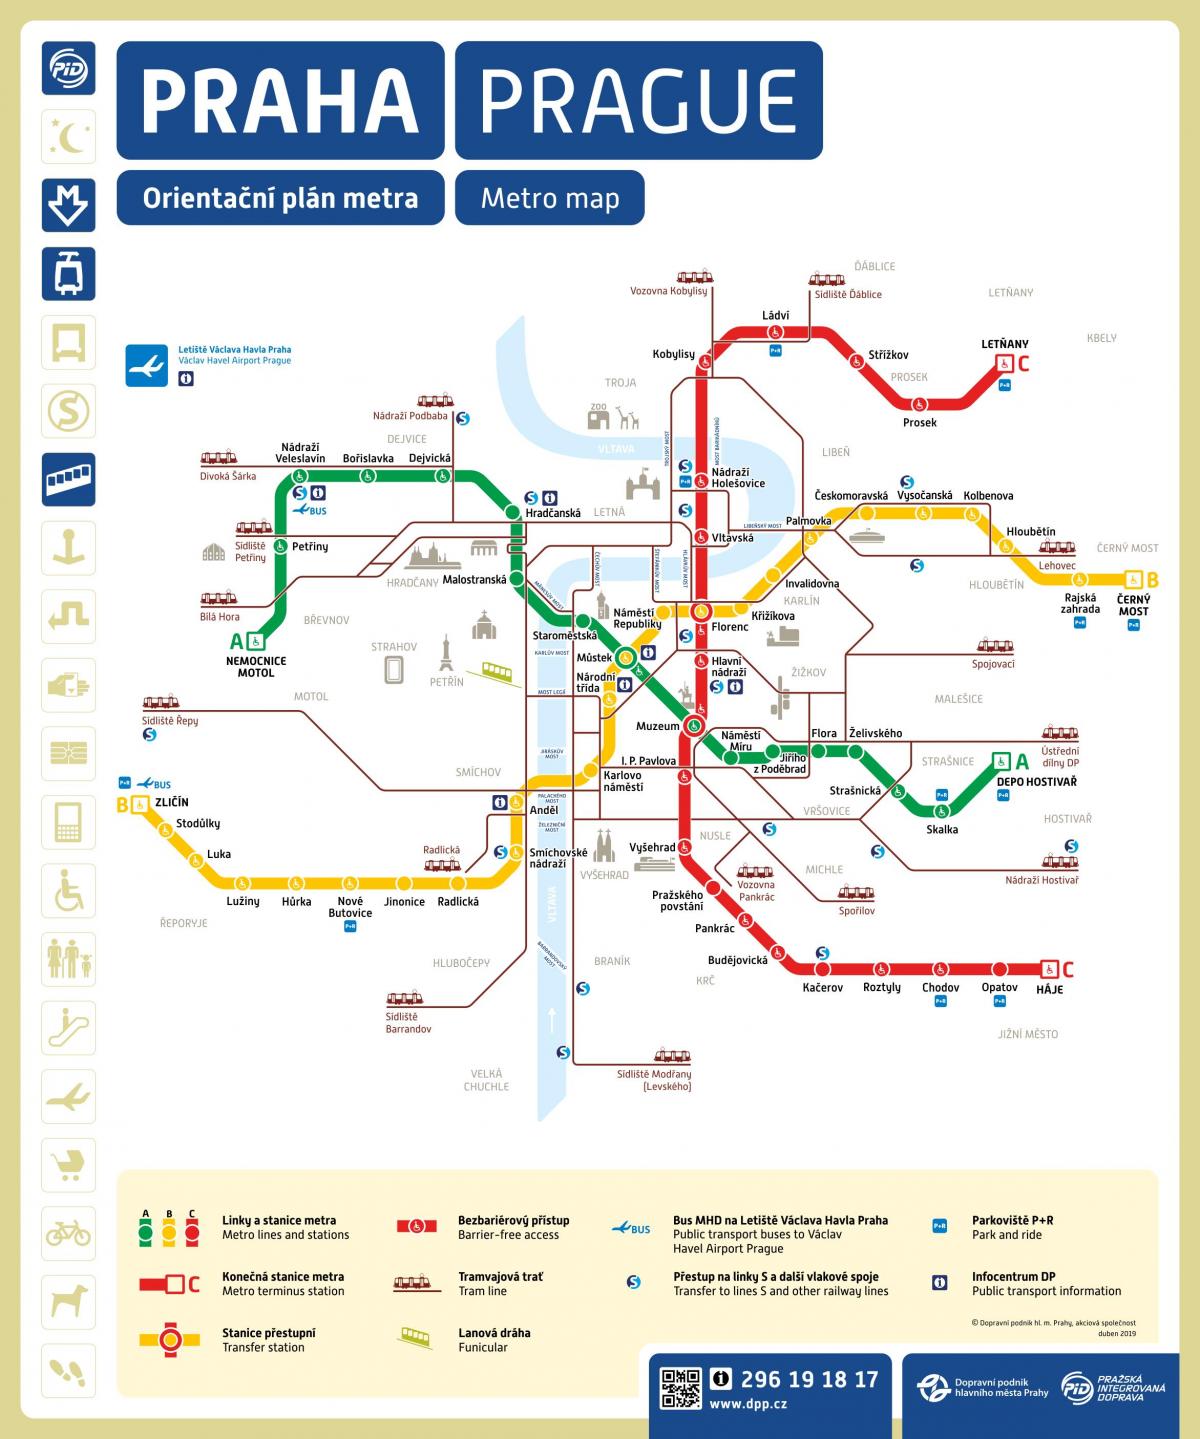 Kaart van de metrostations in Praag